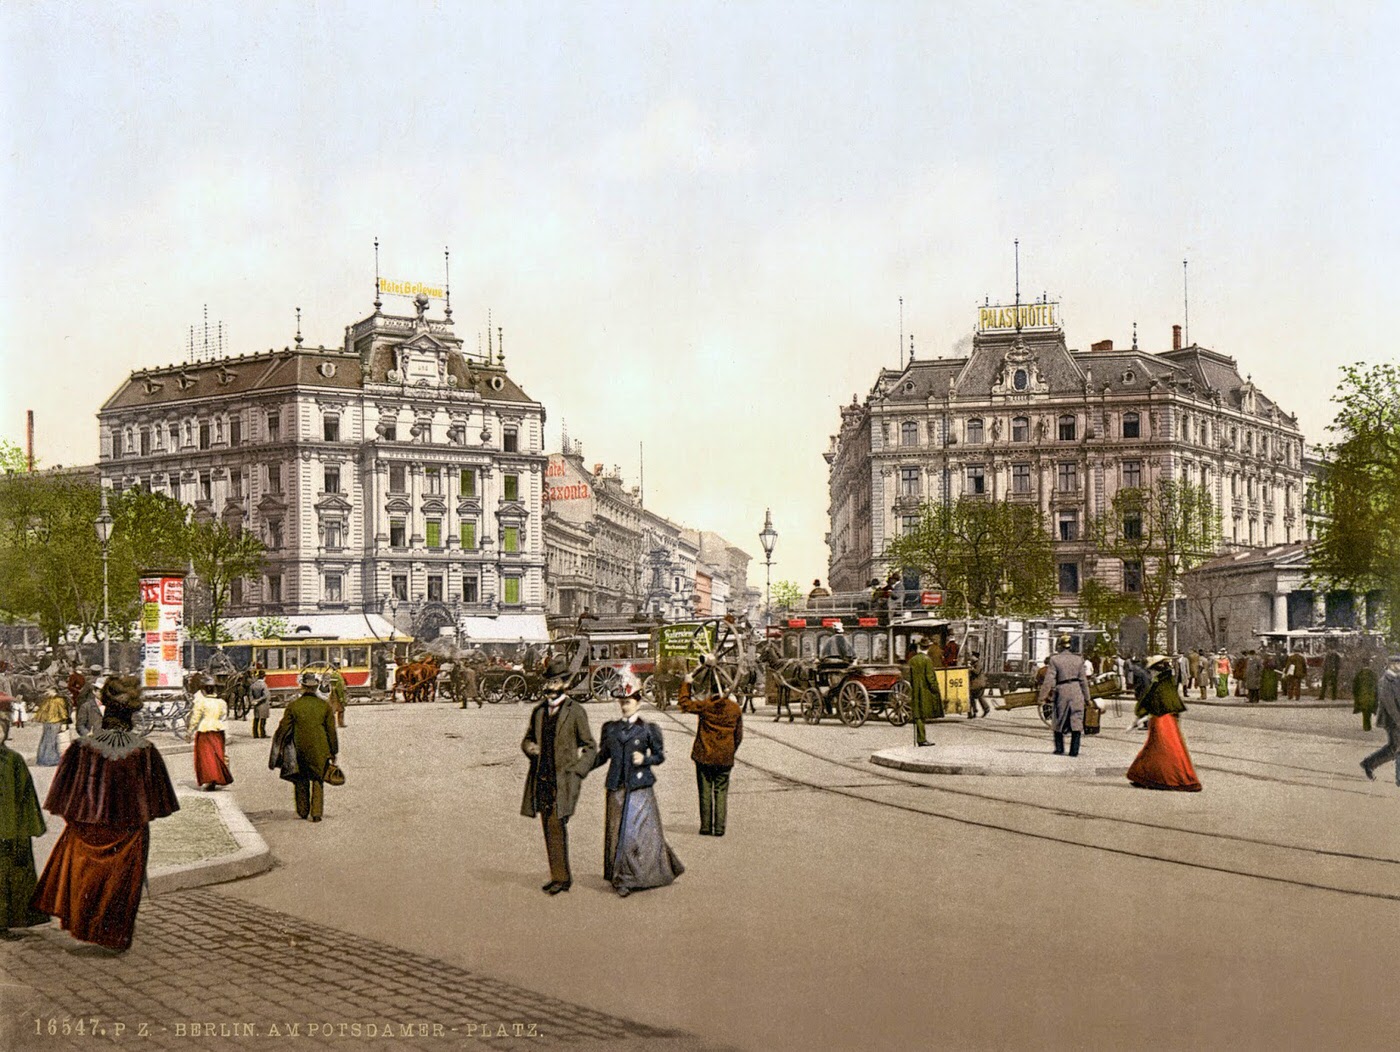 Potsdam Square, Berlin, Germany, 1890